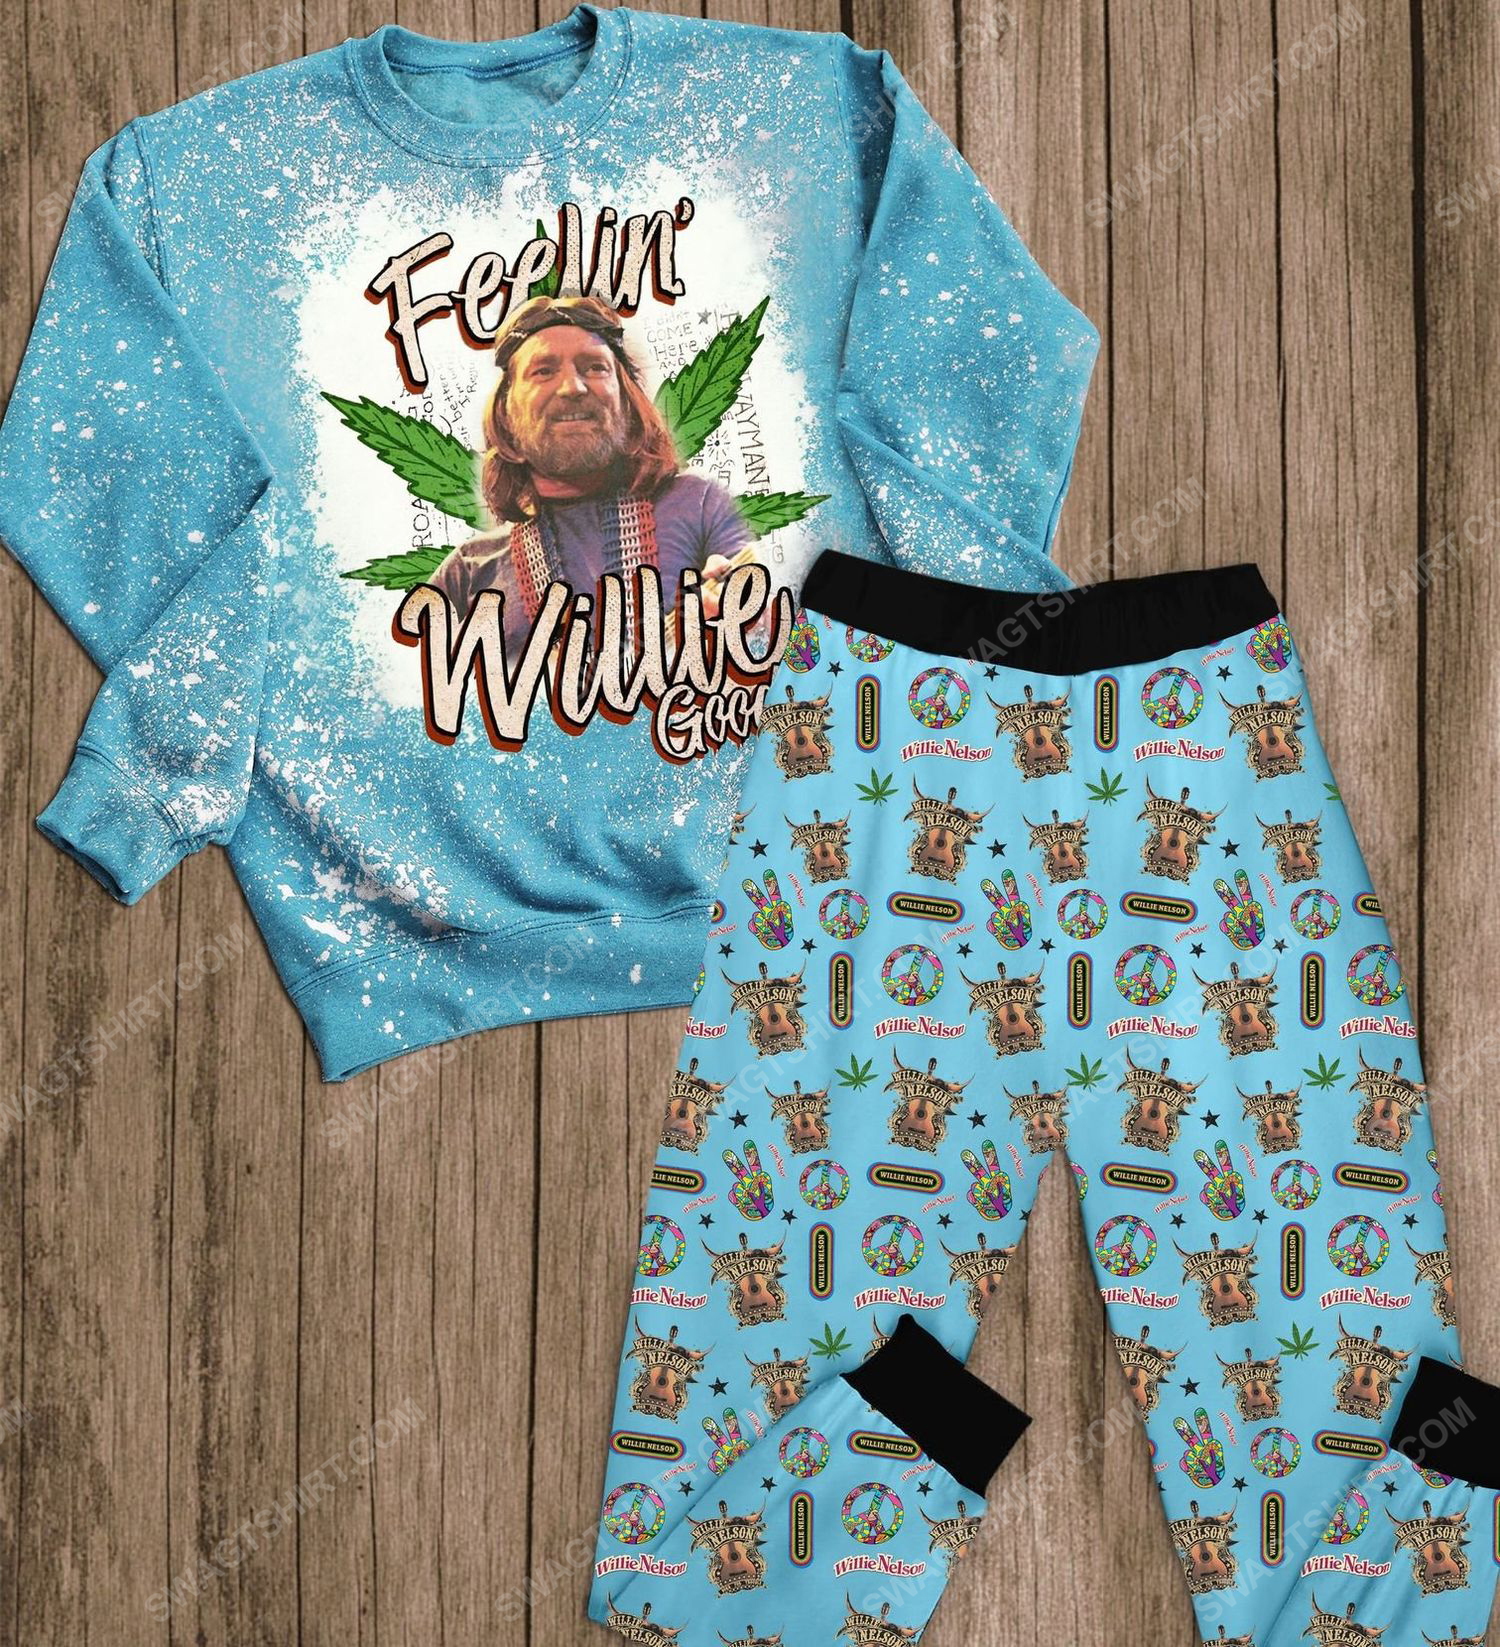 Feeling good willie full print pajamas set 1 - Copy